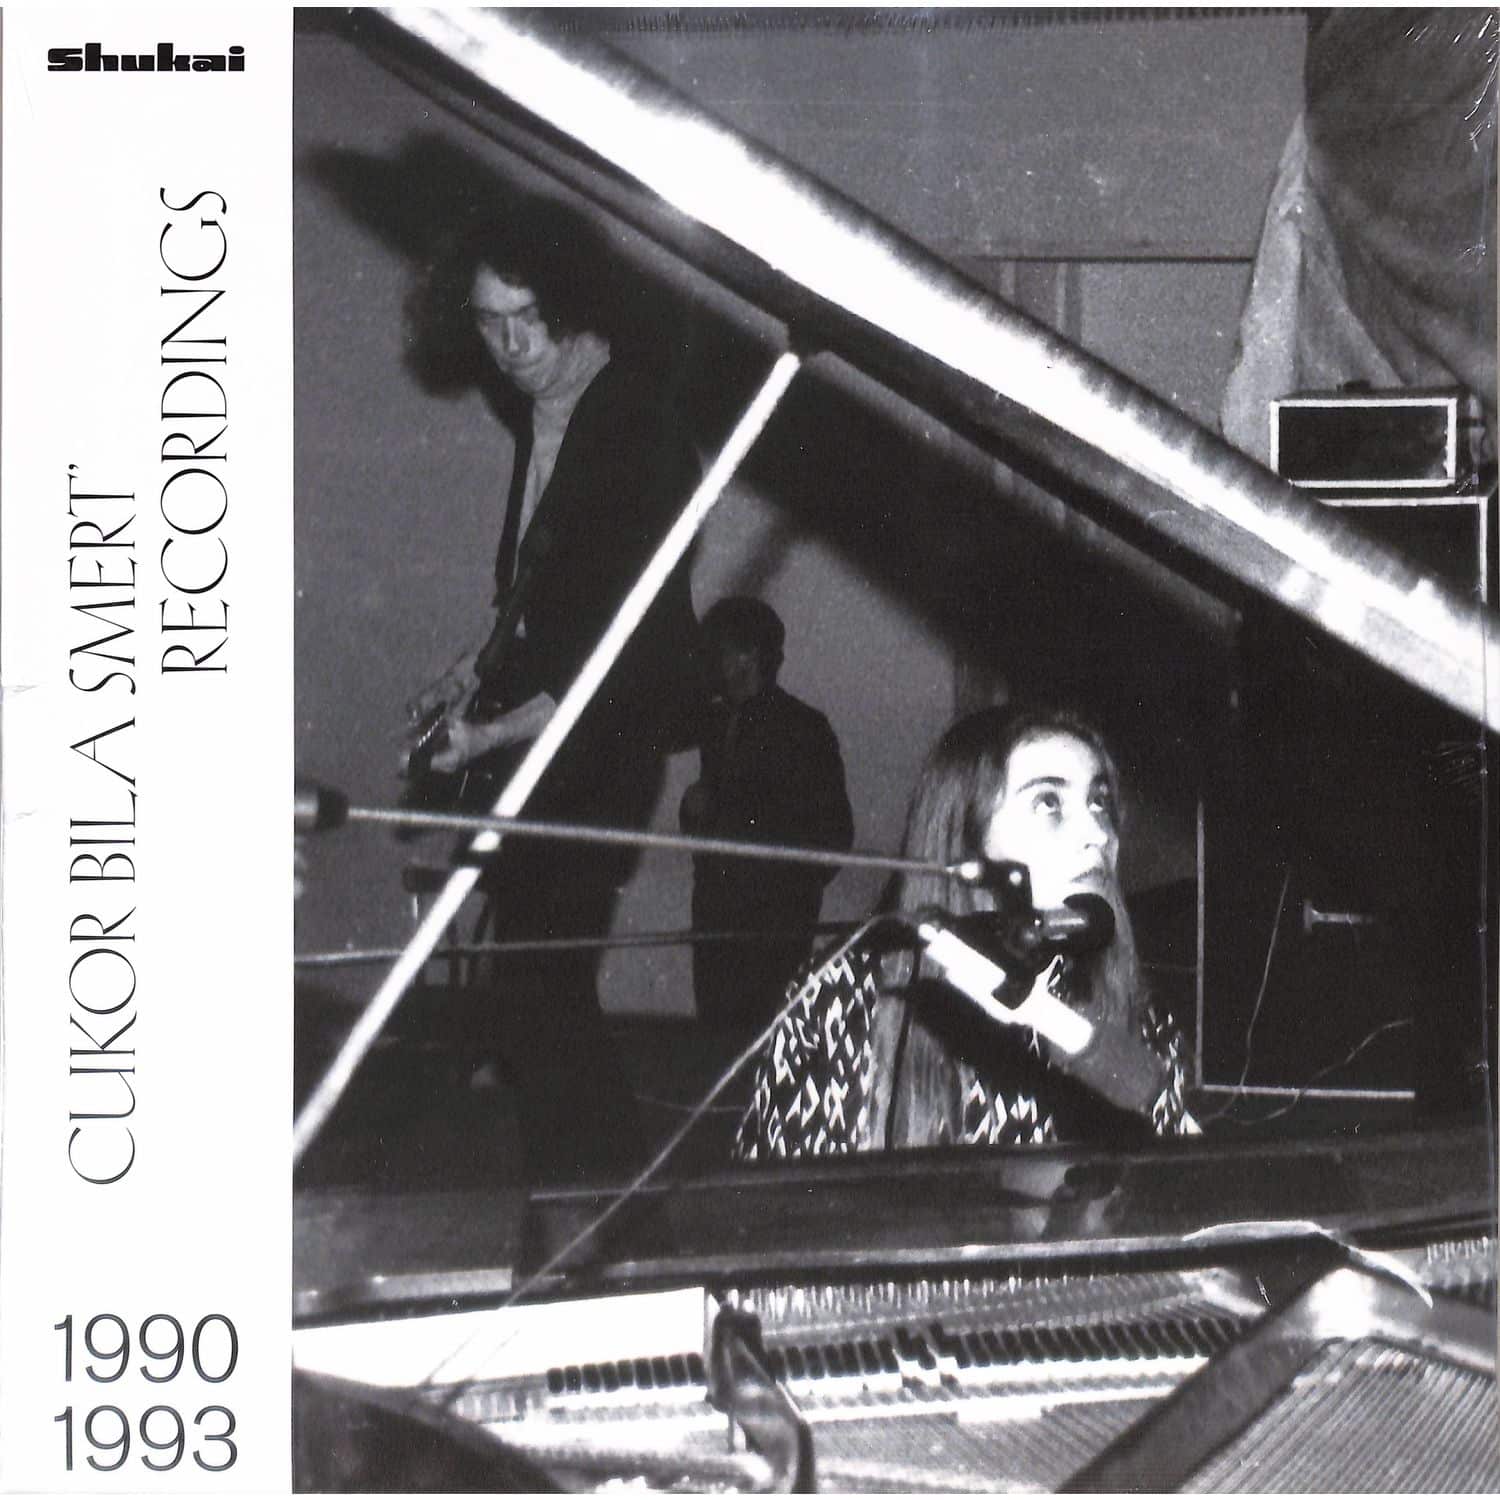 Cukor Bila Smert - RECORDINGS 1990-1993 